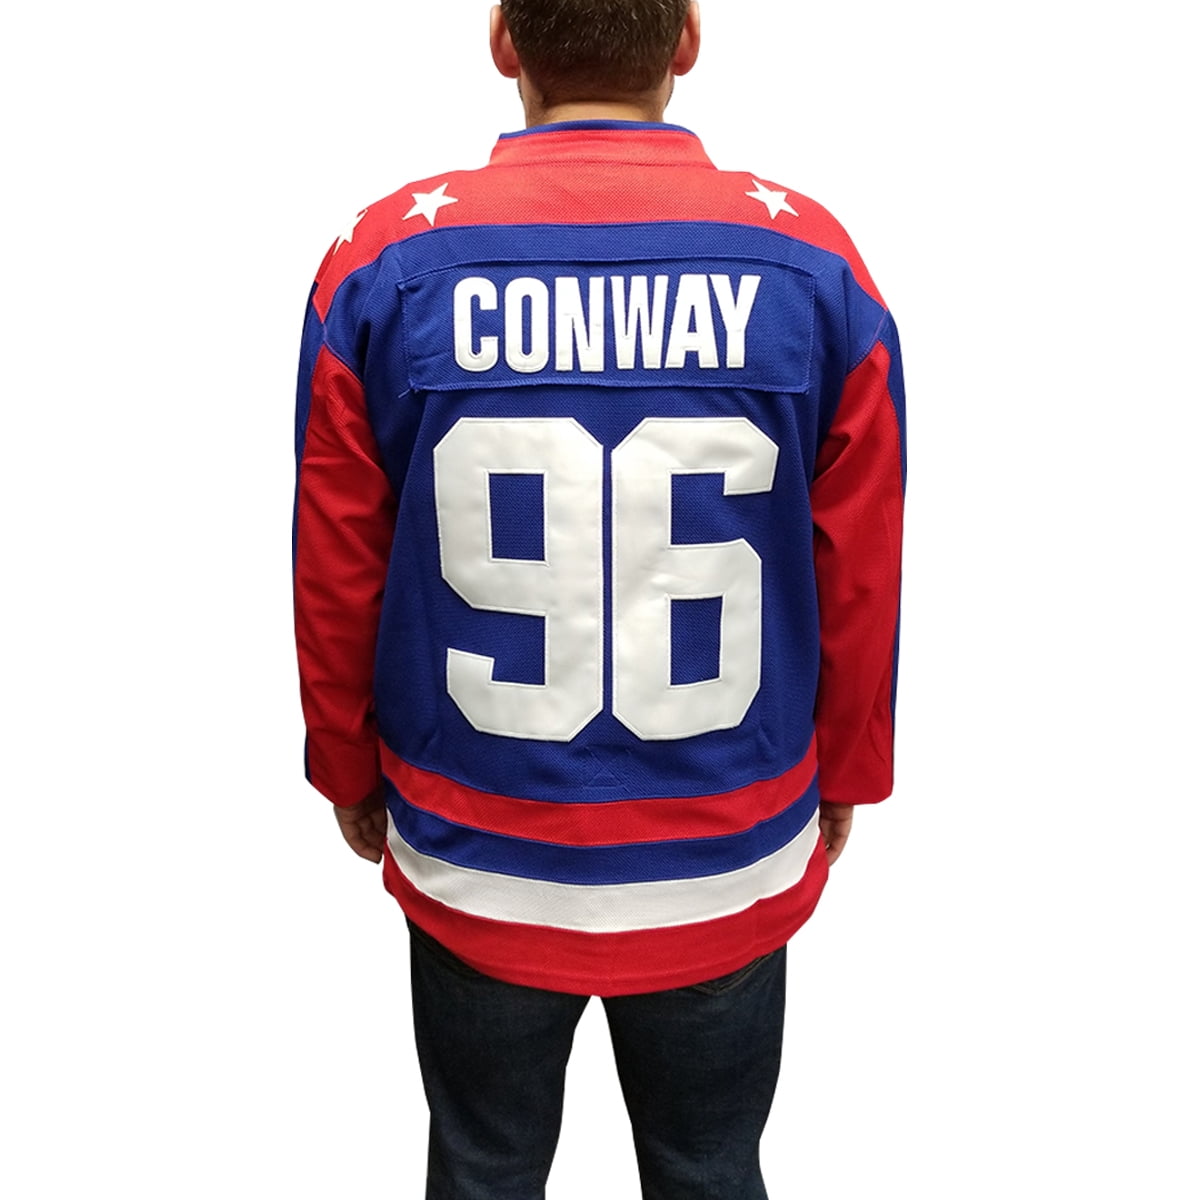 Kid's CONWAY Hockey Jersey